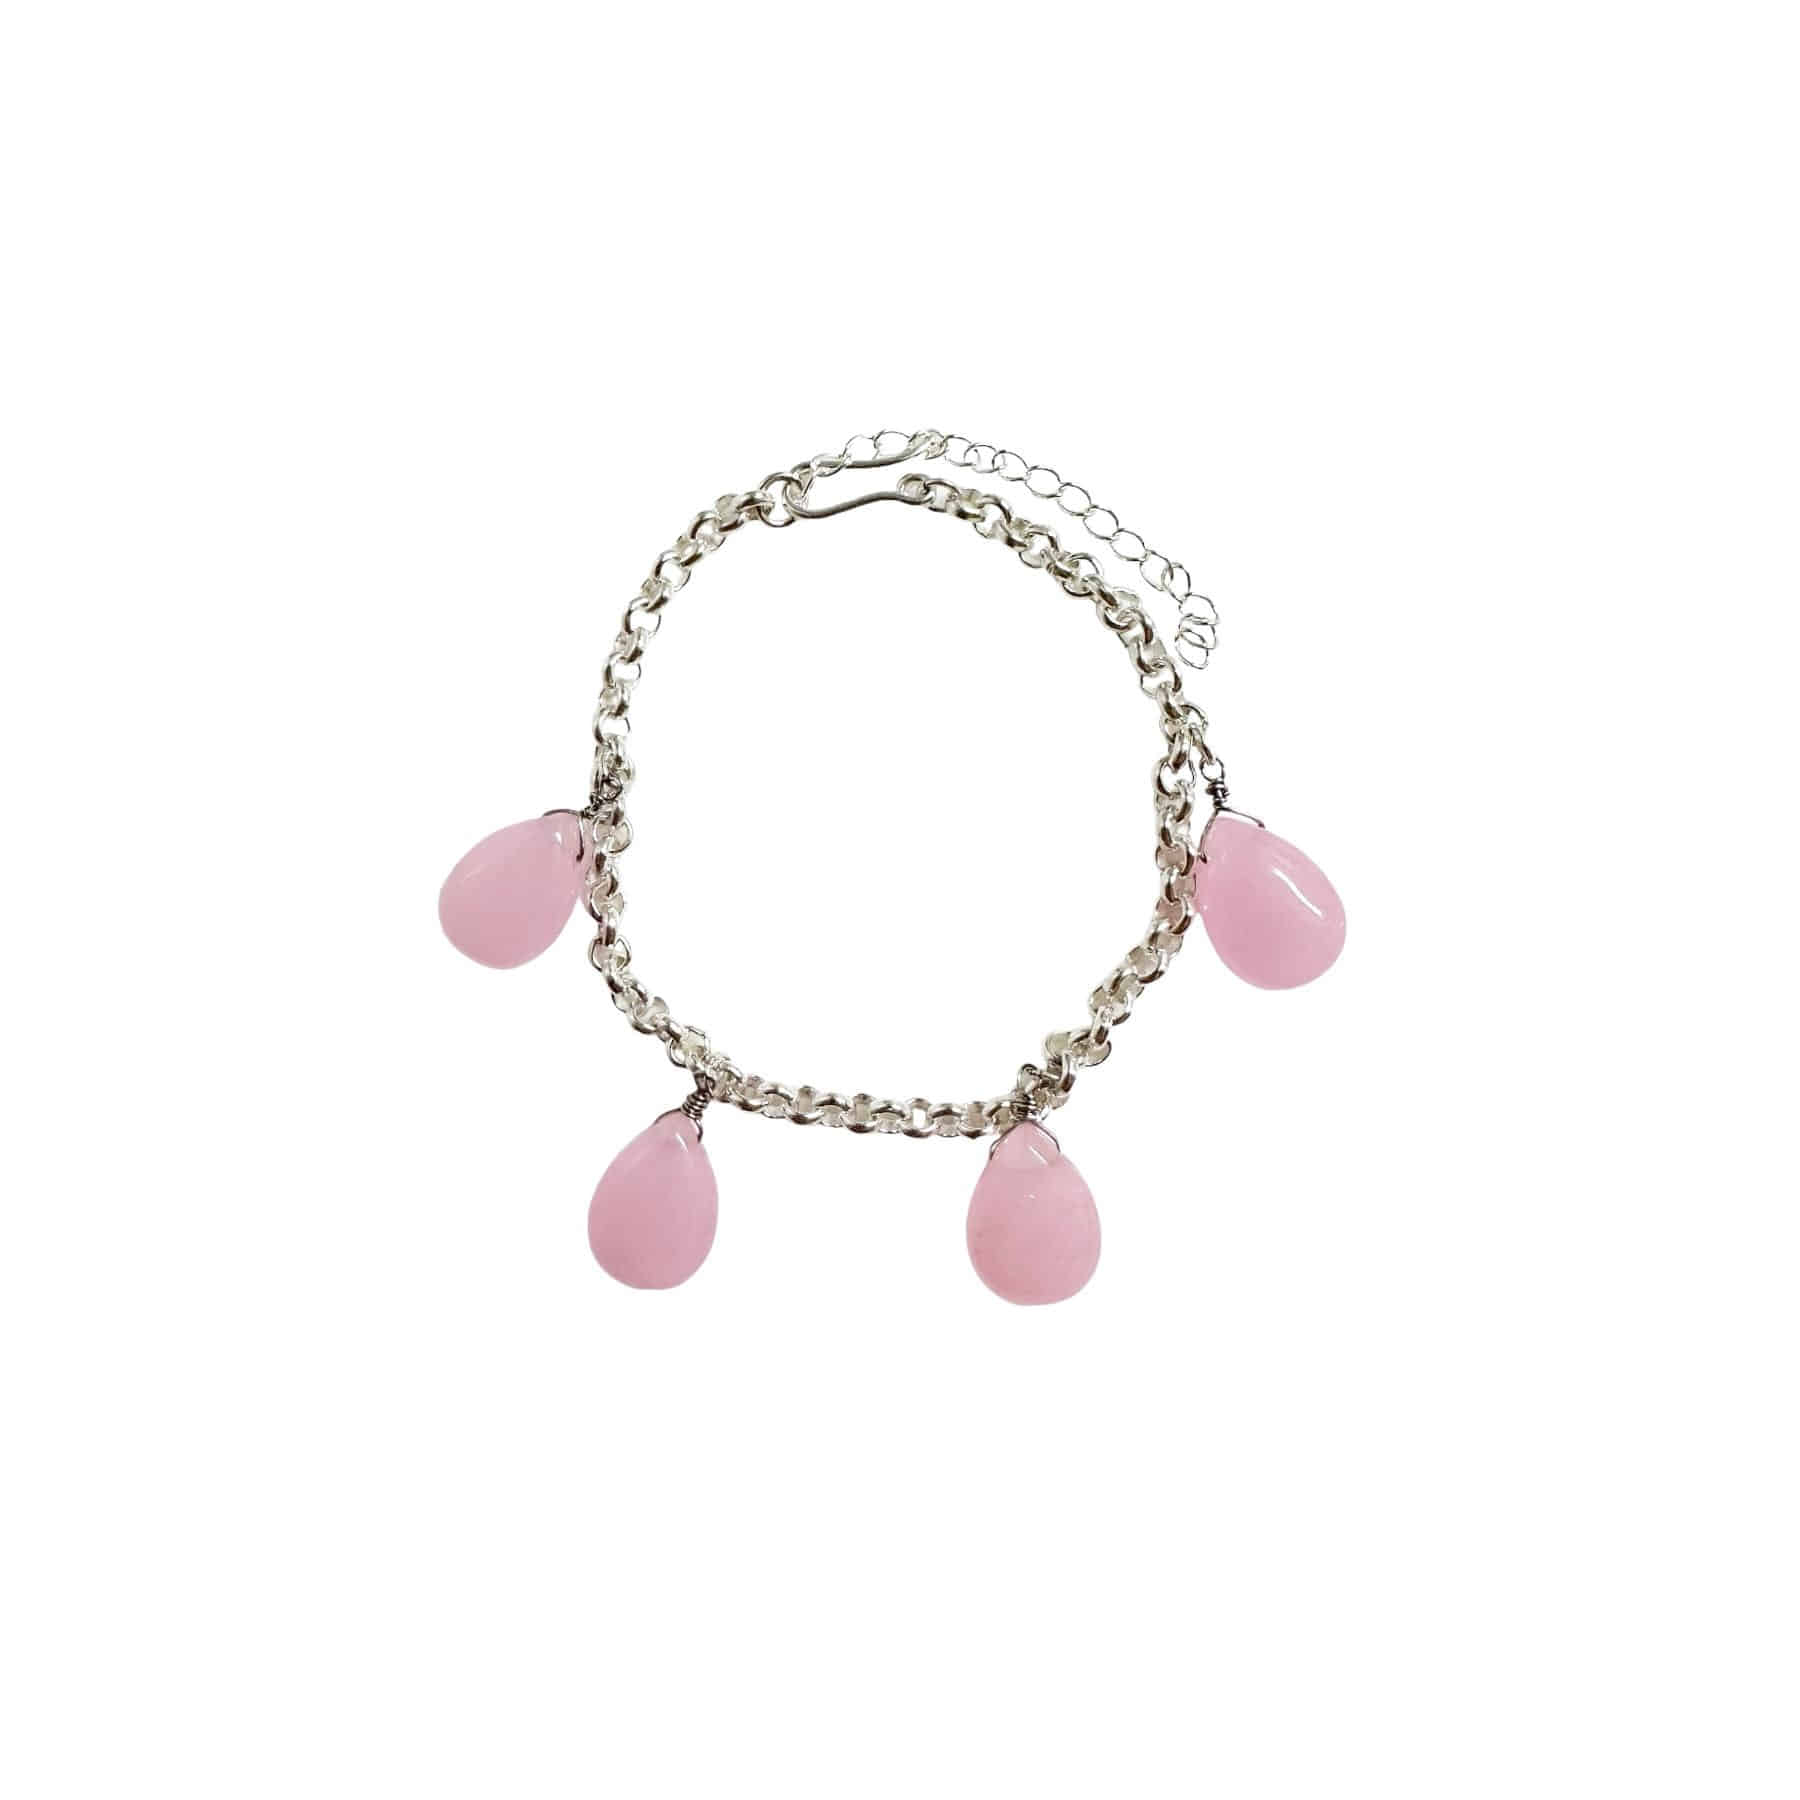 rose stone bracelet